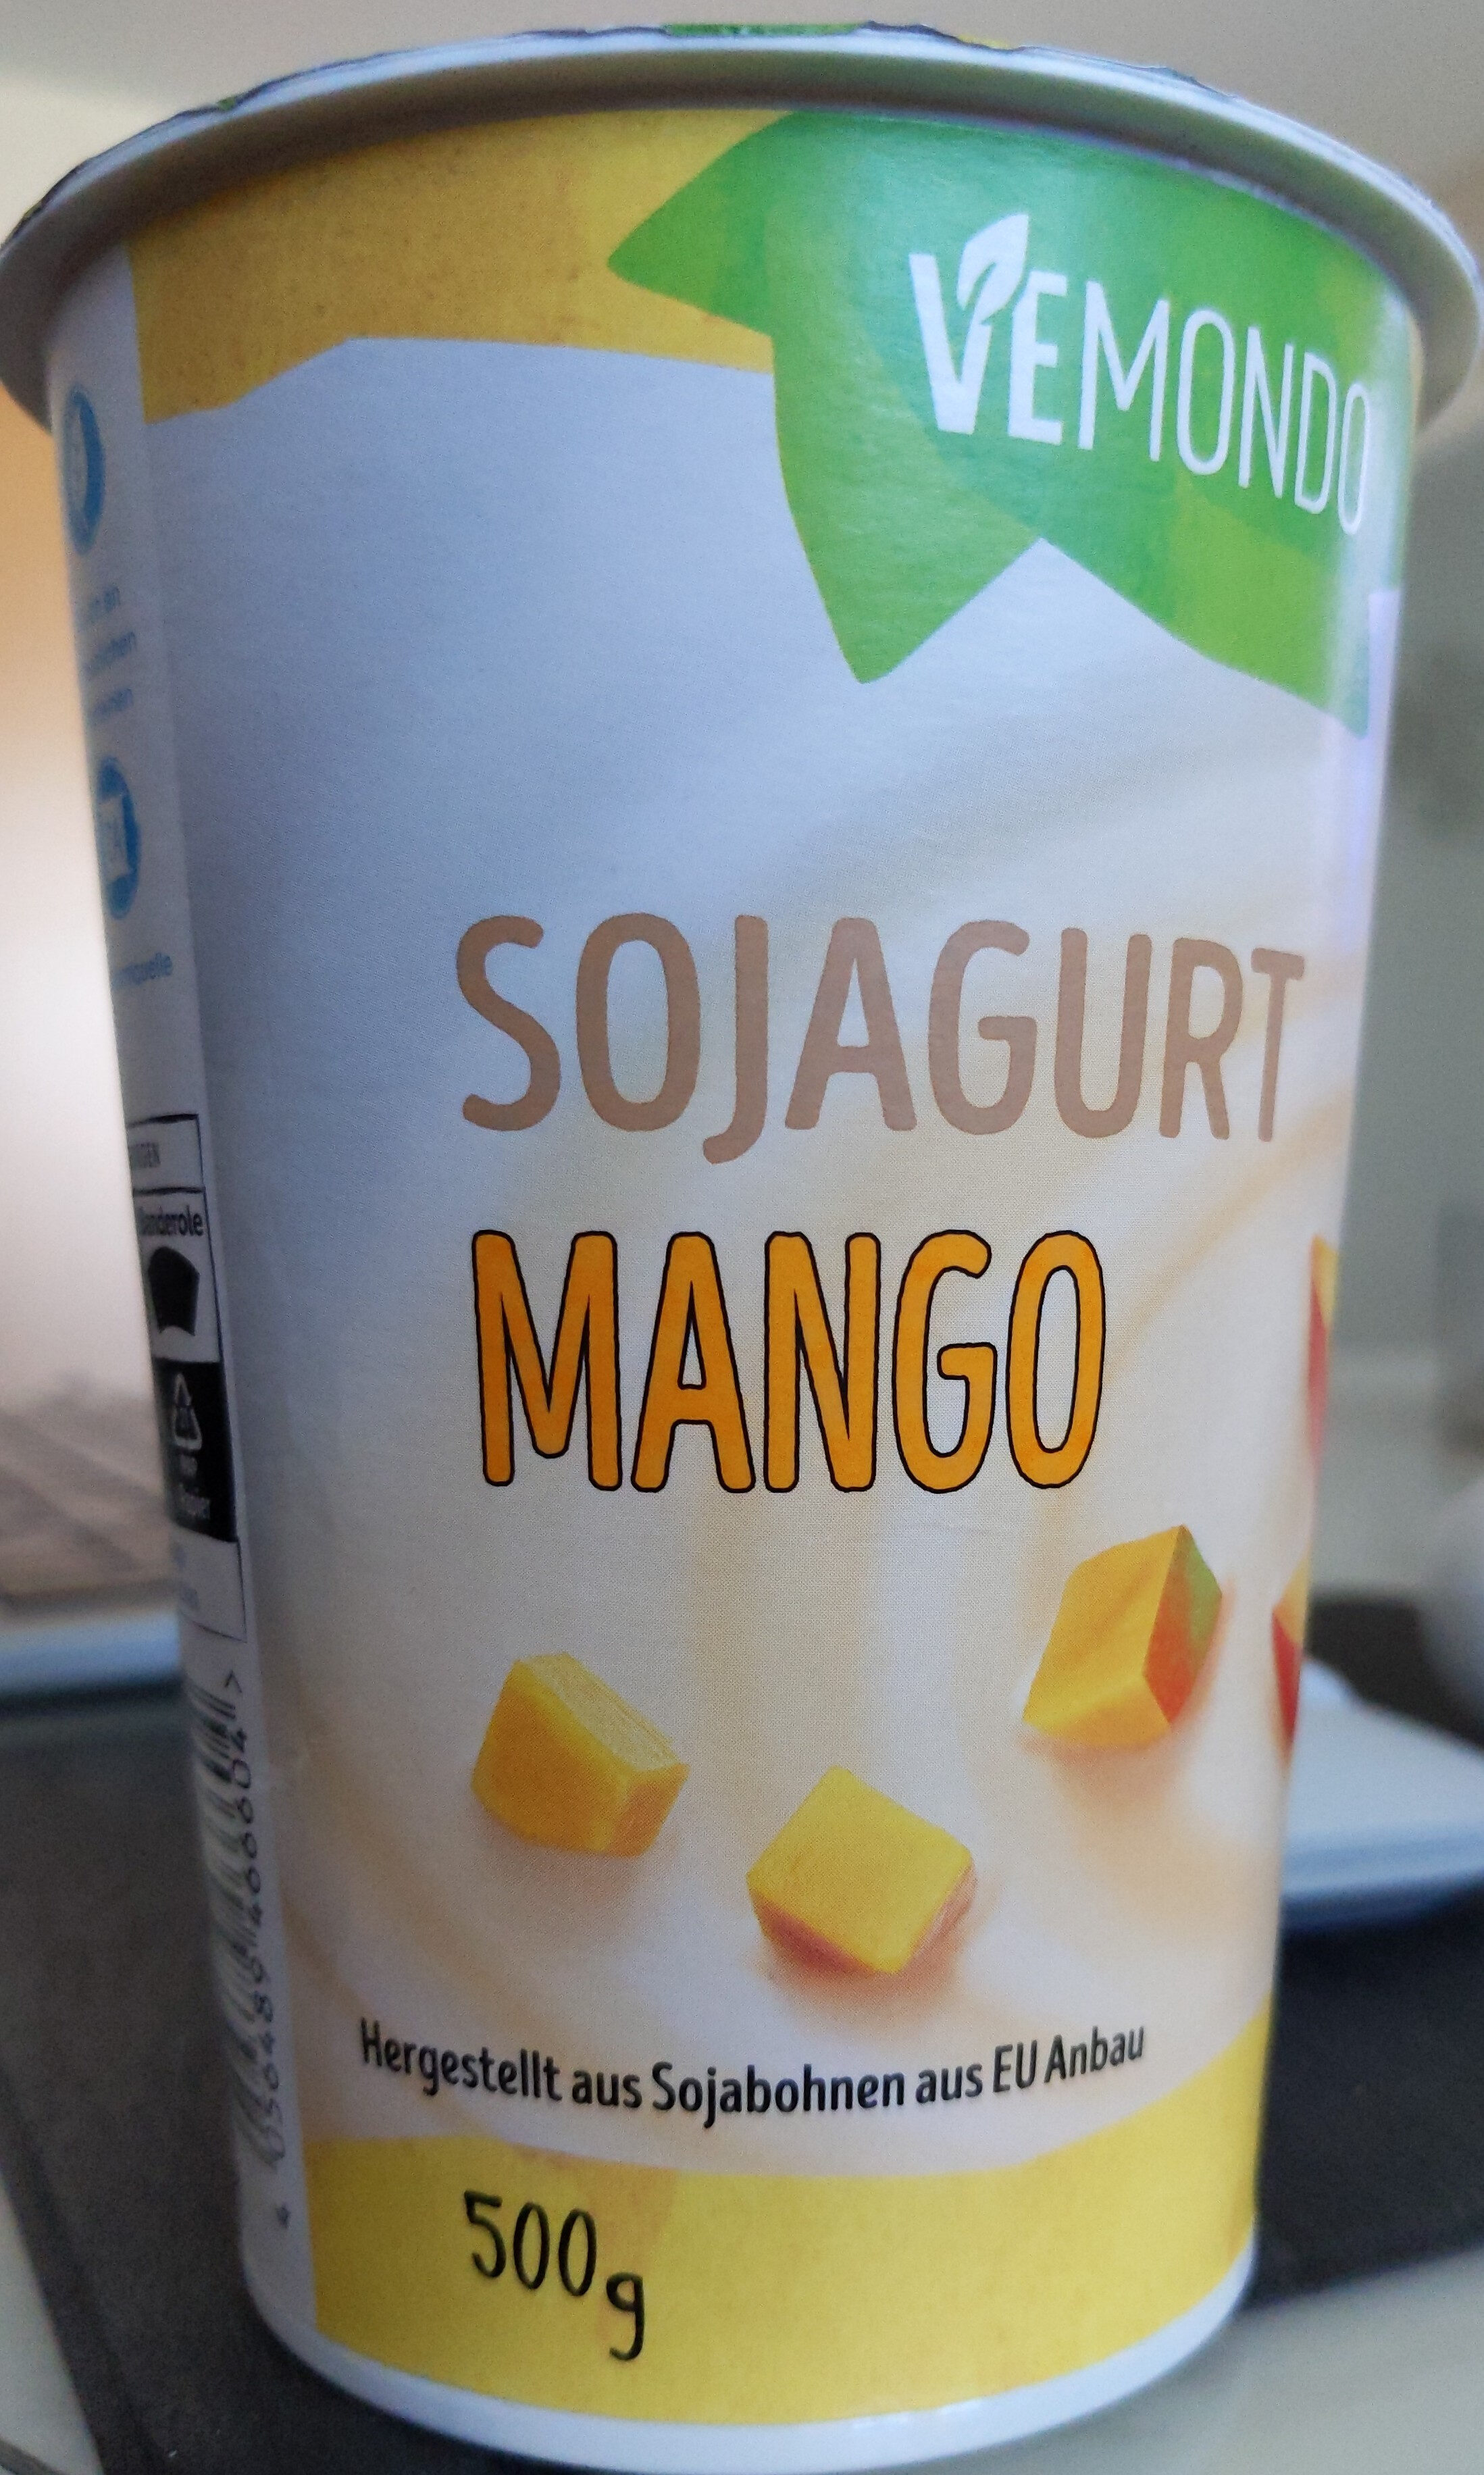 Sojagurt Mango - Product - de